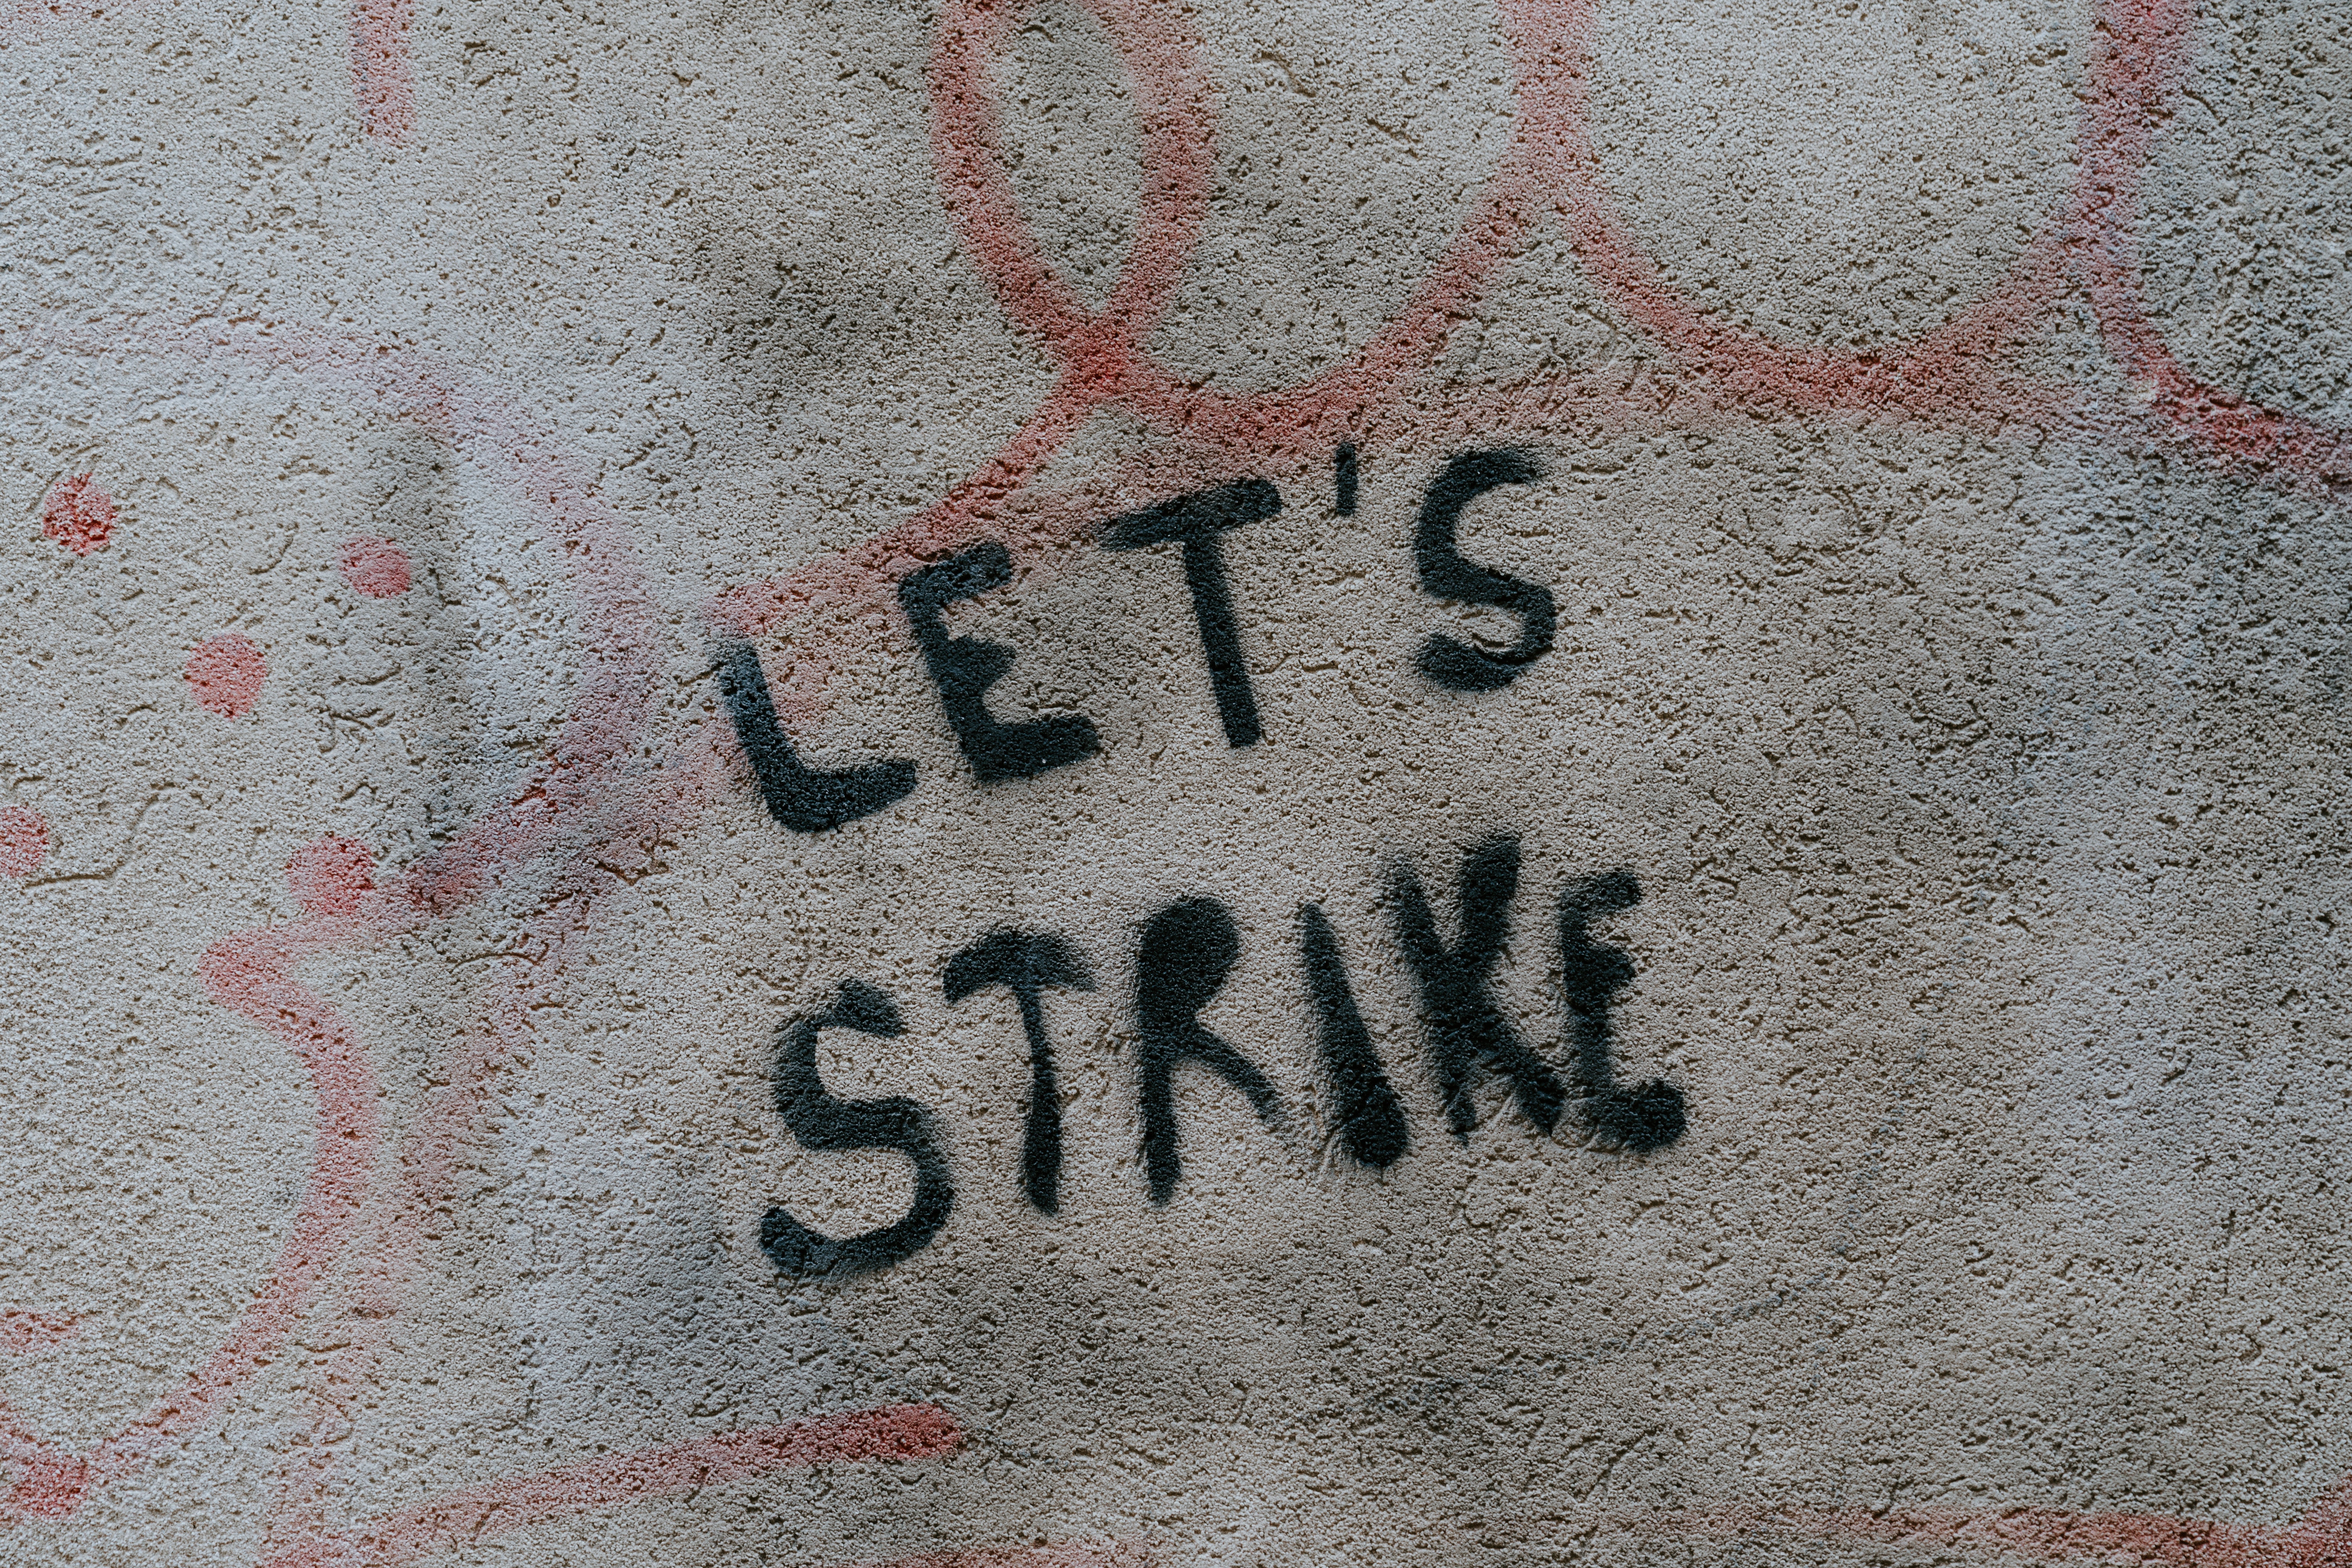 Graffiti says "Let's strike."